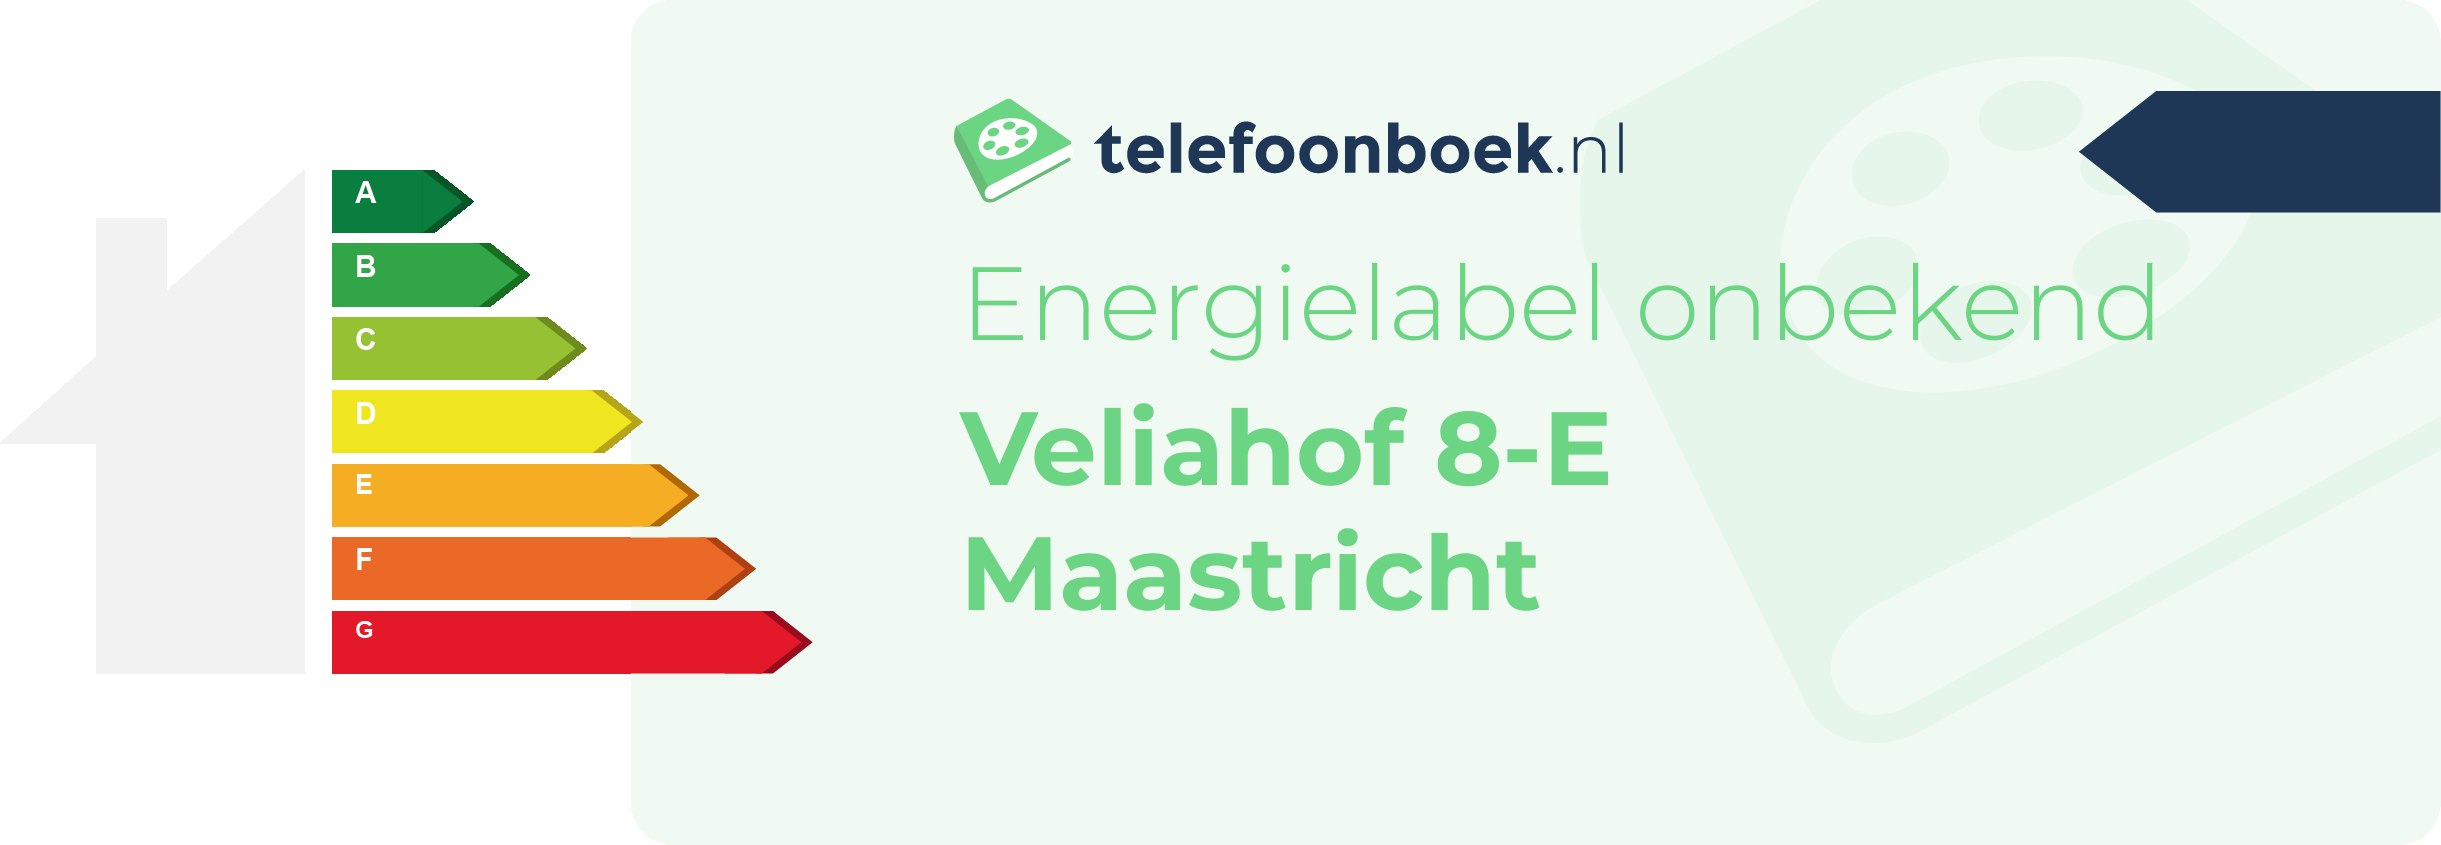 Energielabel Veliahof 8-E Maastricht